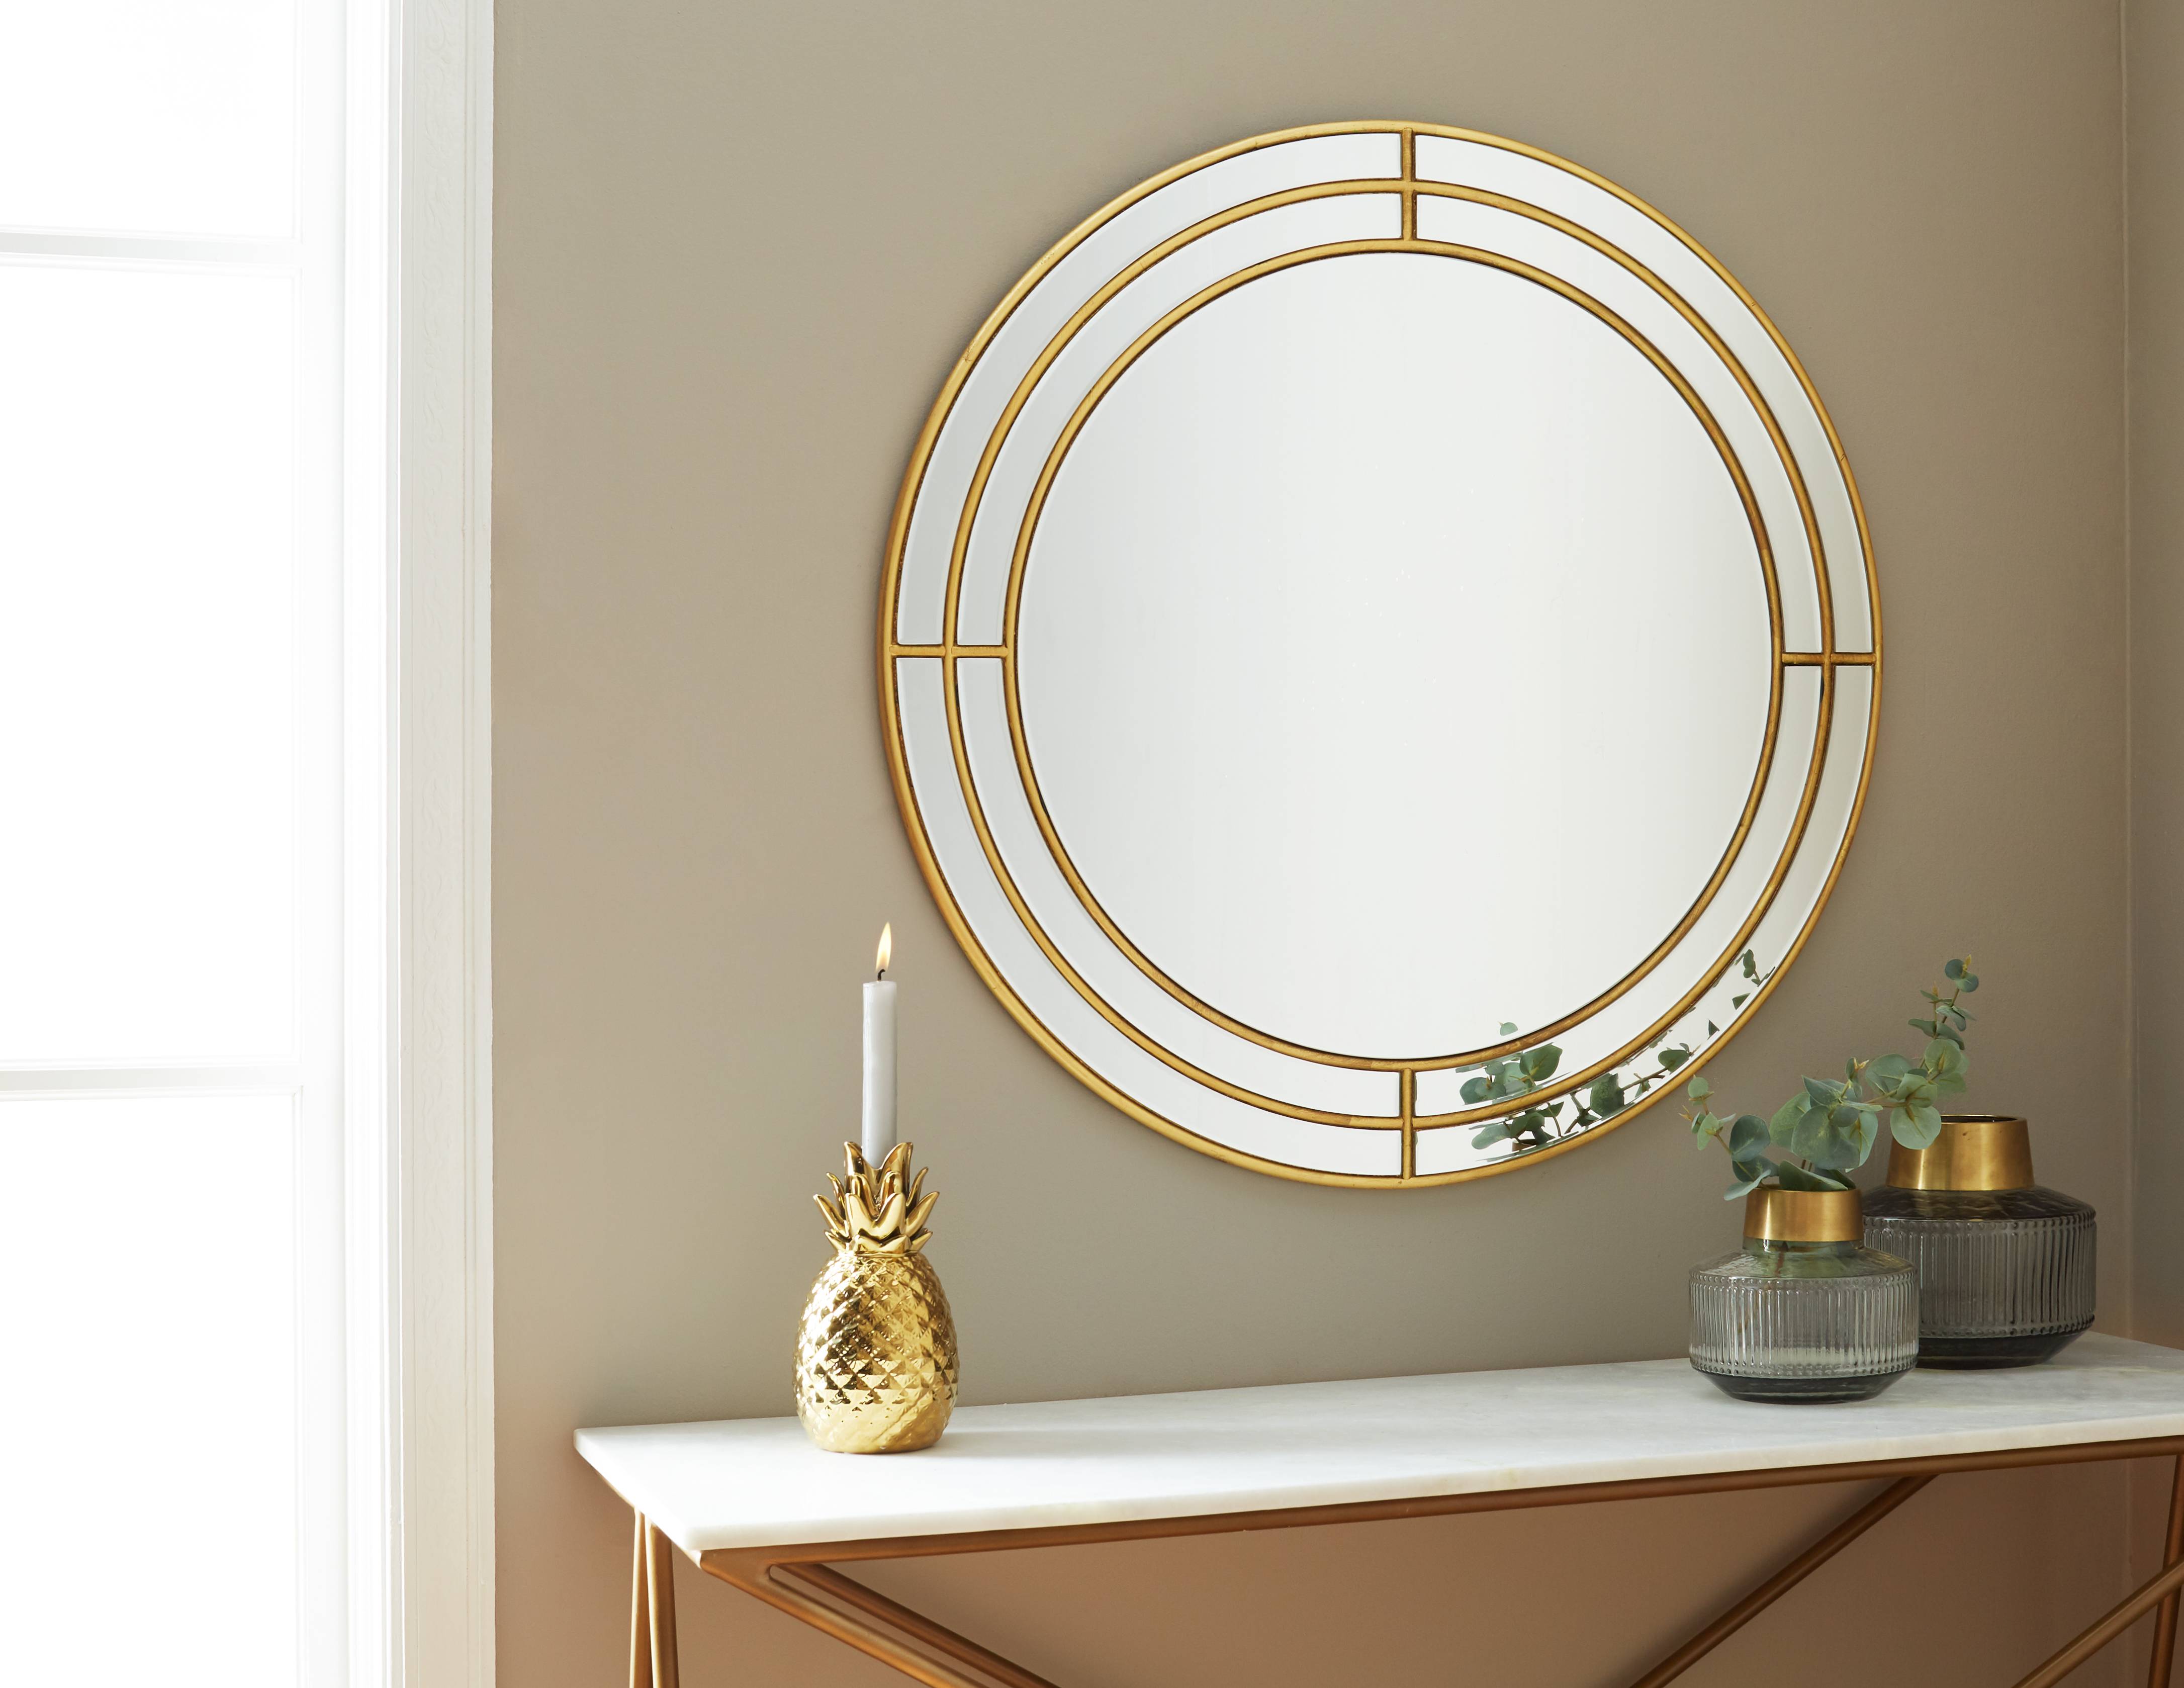 Bedroom Wall Mirrors Decorative | Home Design